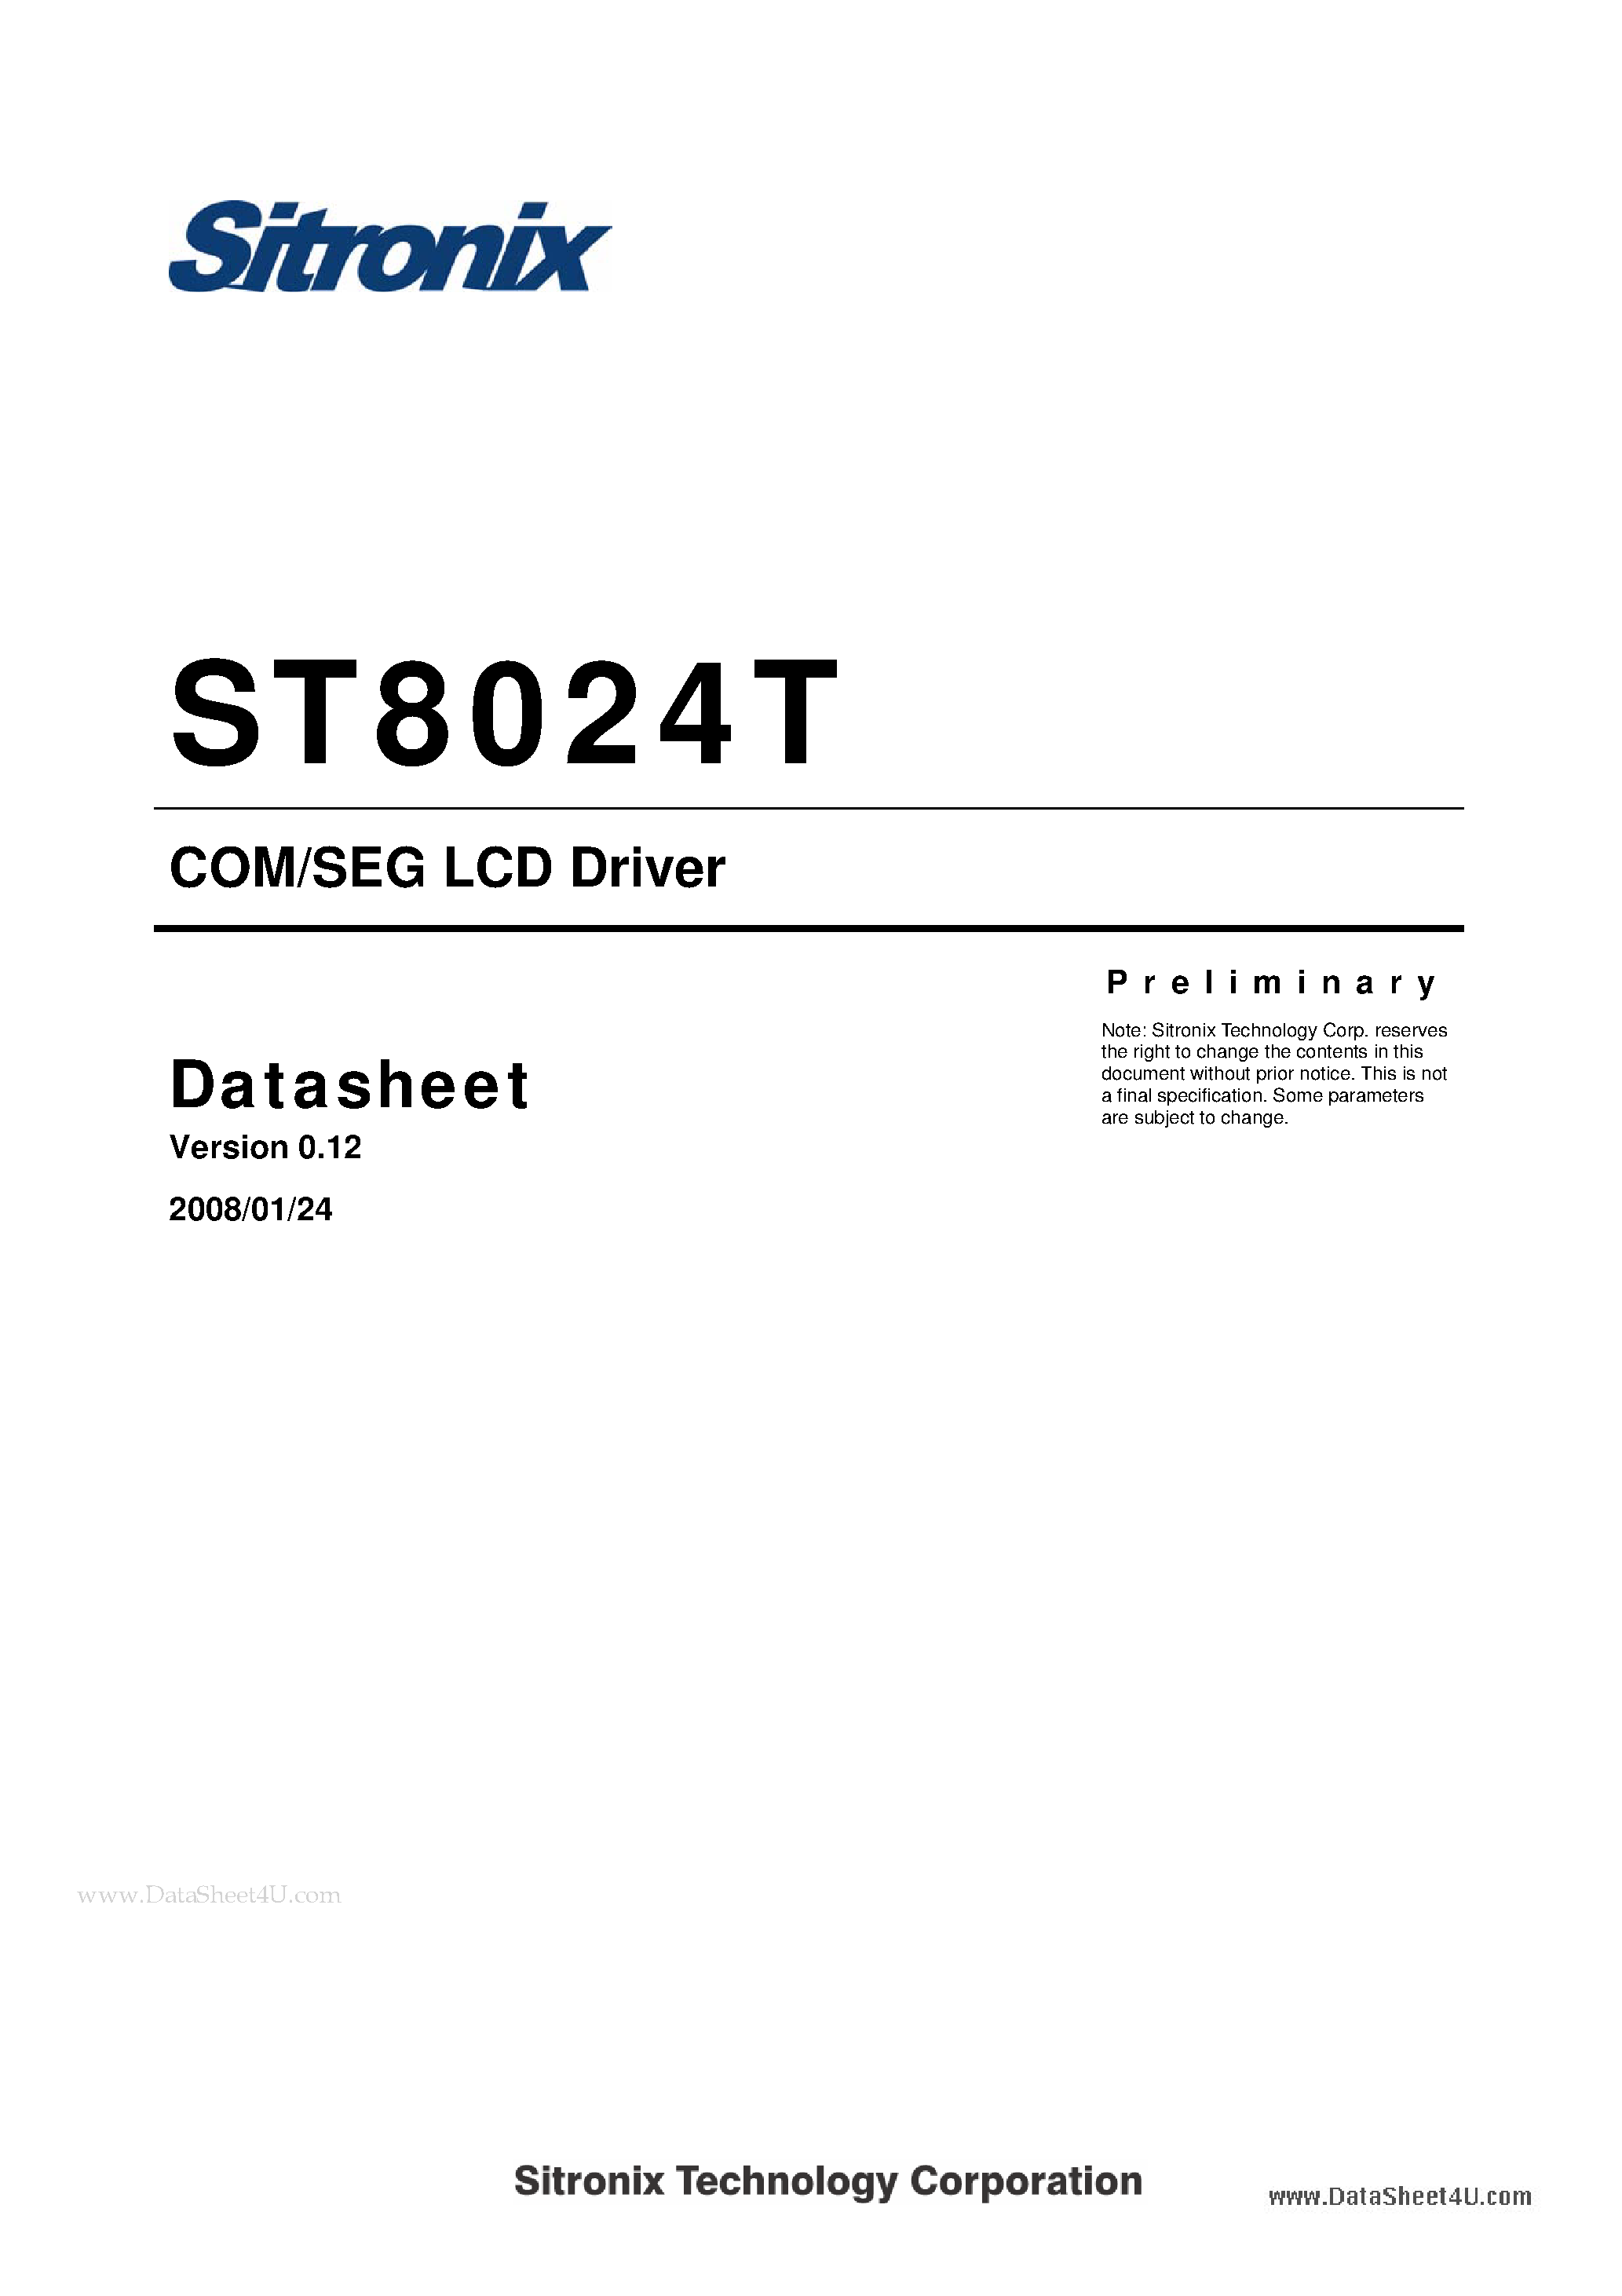 Datasheet ST8024T - COM/SEG LCD Driver page 1